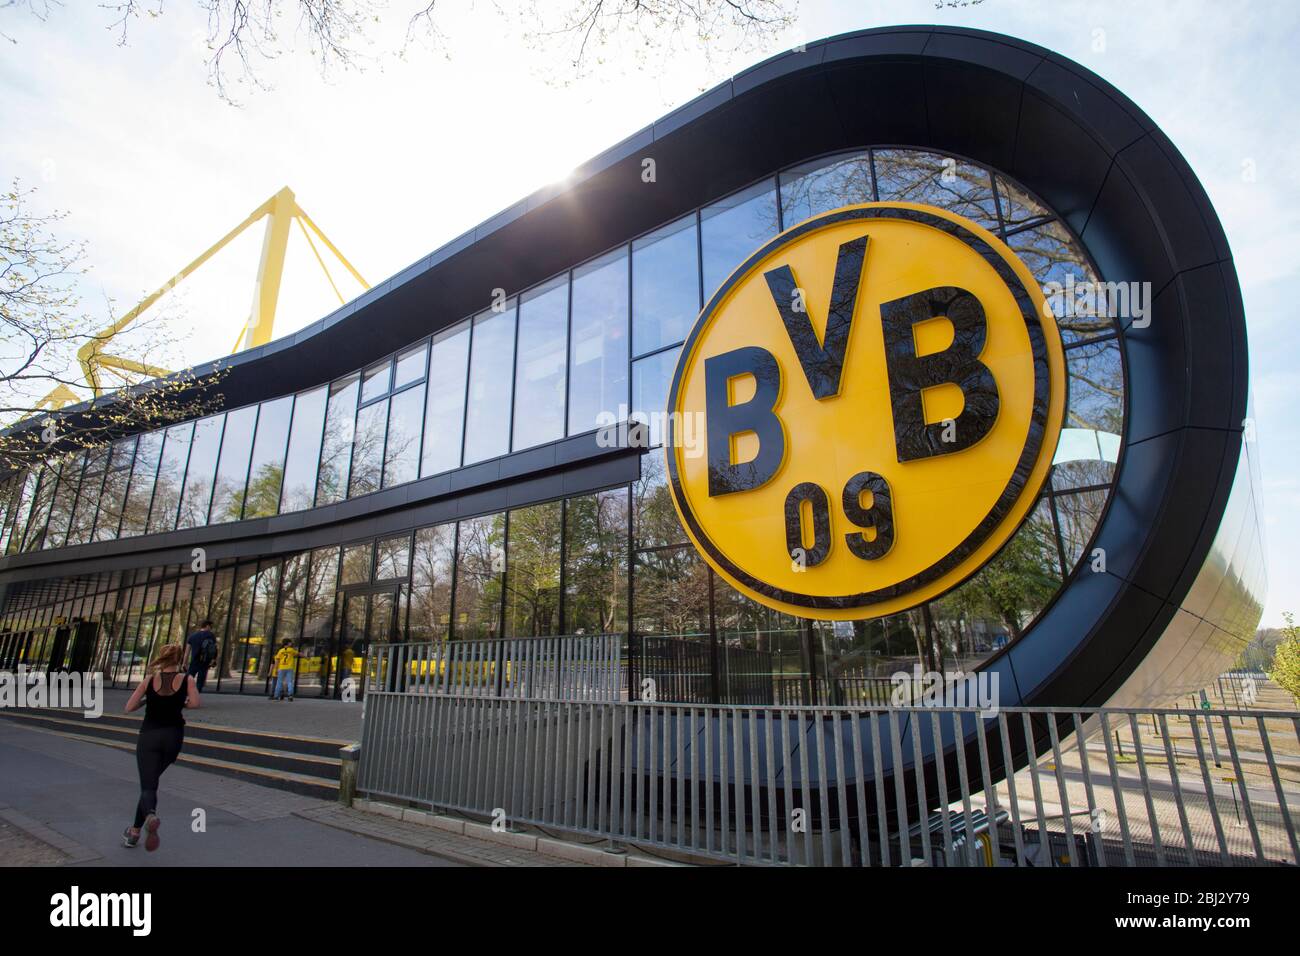 BVB Fan shop BVB FanWelt du club de football Borussia Dortmund au stade signal Iduna Park, Dortmund, Allemagne. BVB-Fanshop, BVB FanWelt am Stad Banque D'Images